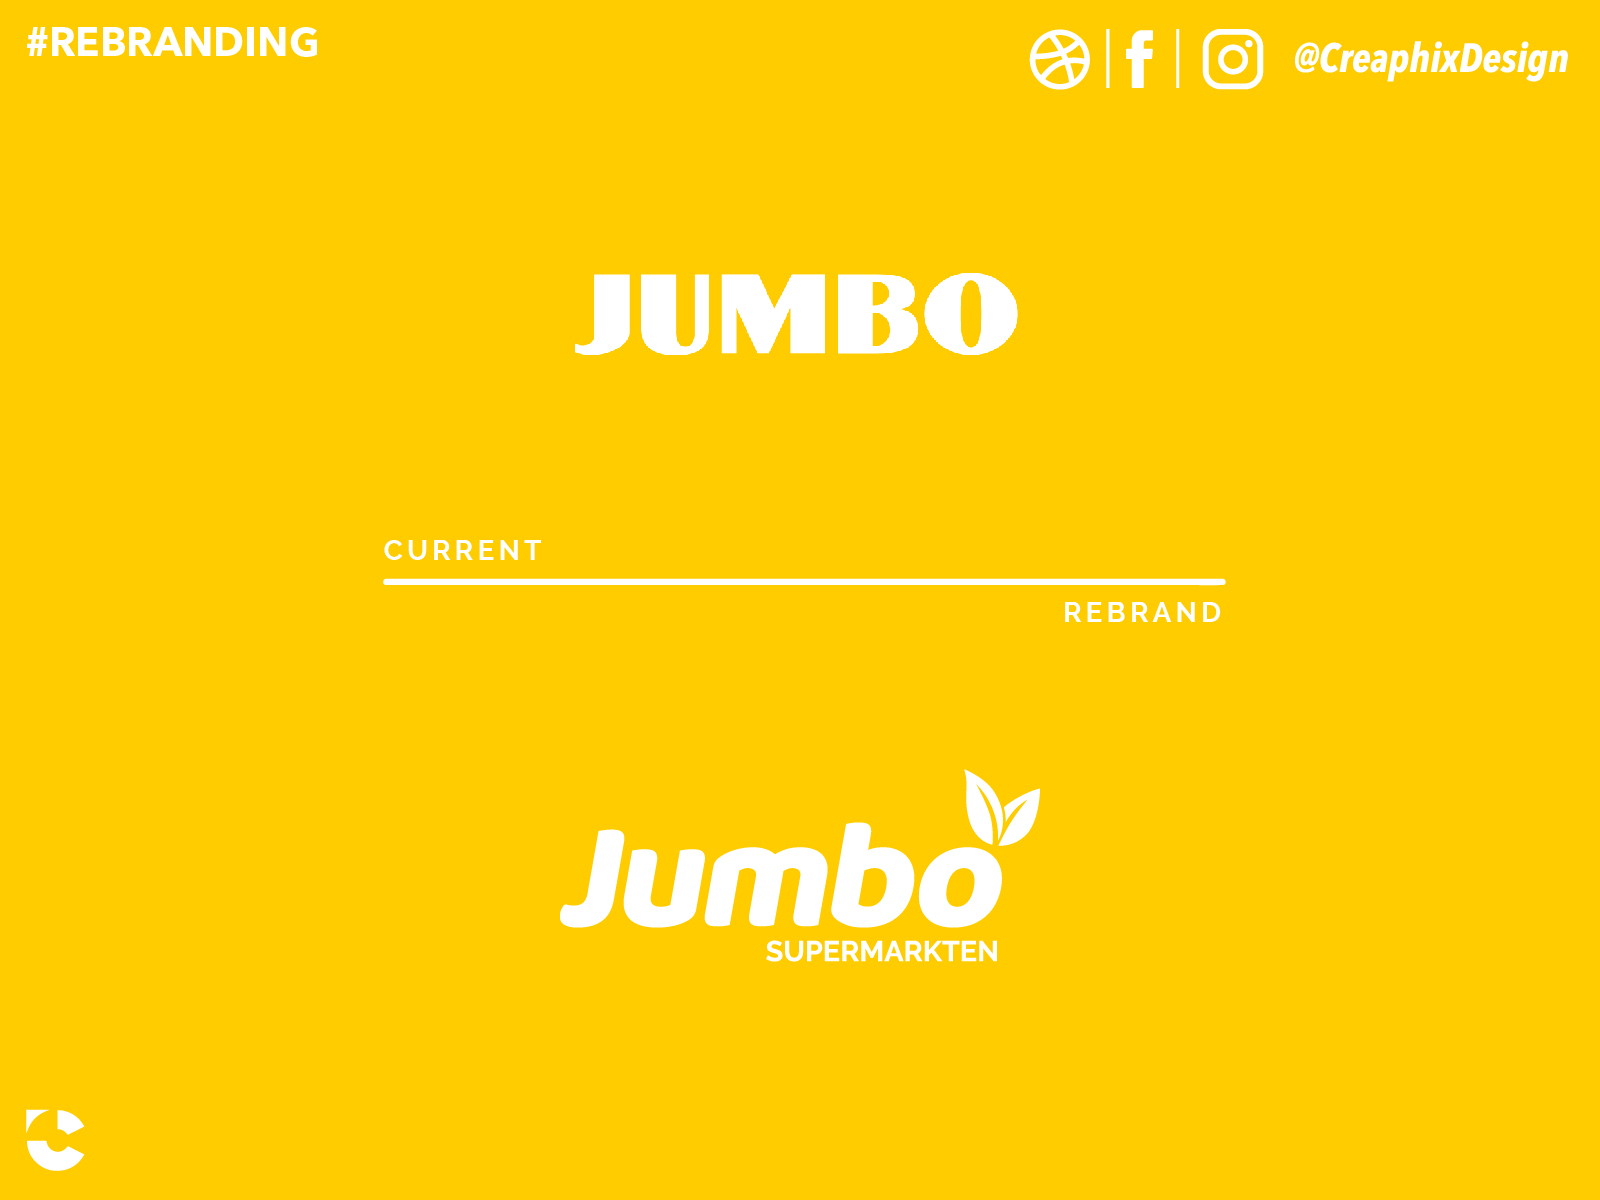 Jumbo Supermarkets - Logo Rebrand By Jeroen Van Pelt On Dribbble